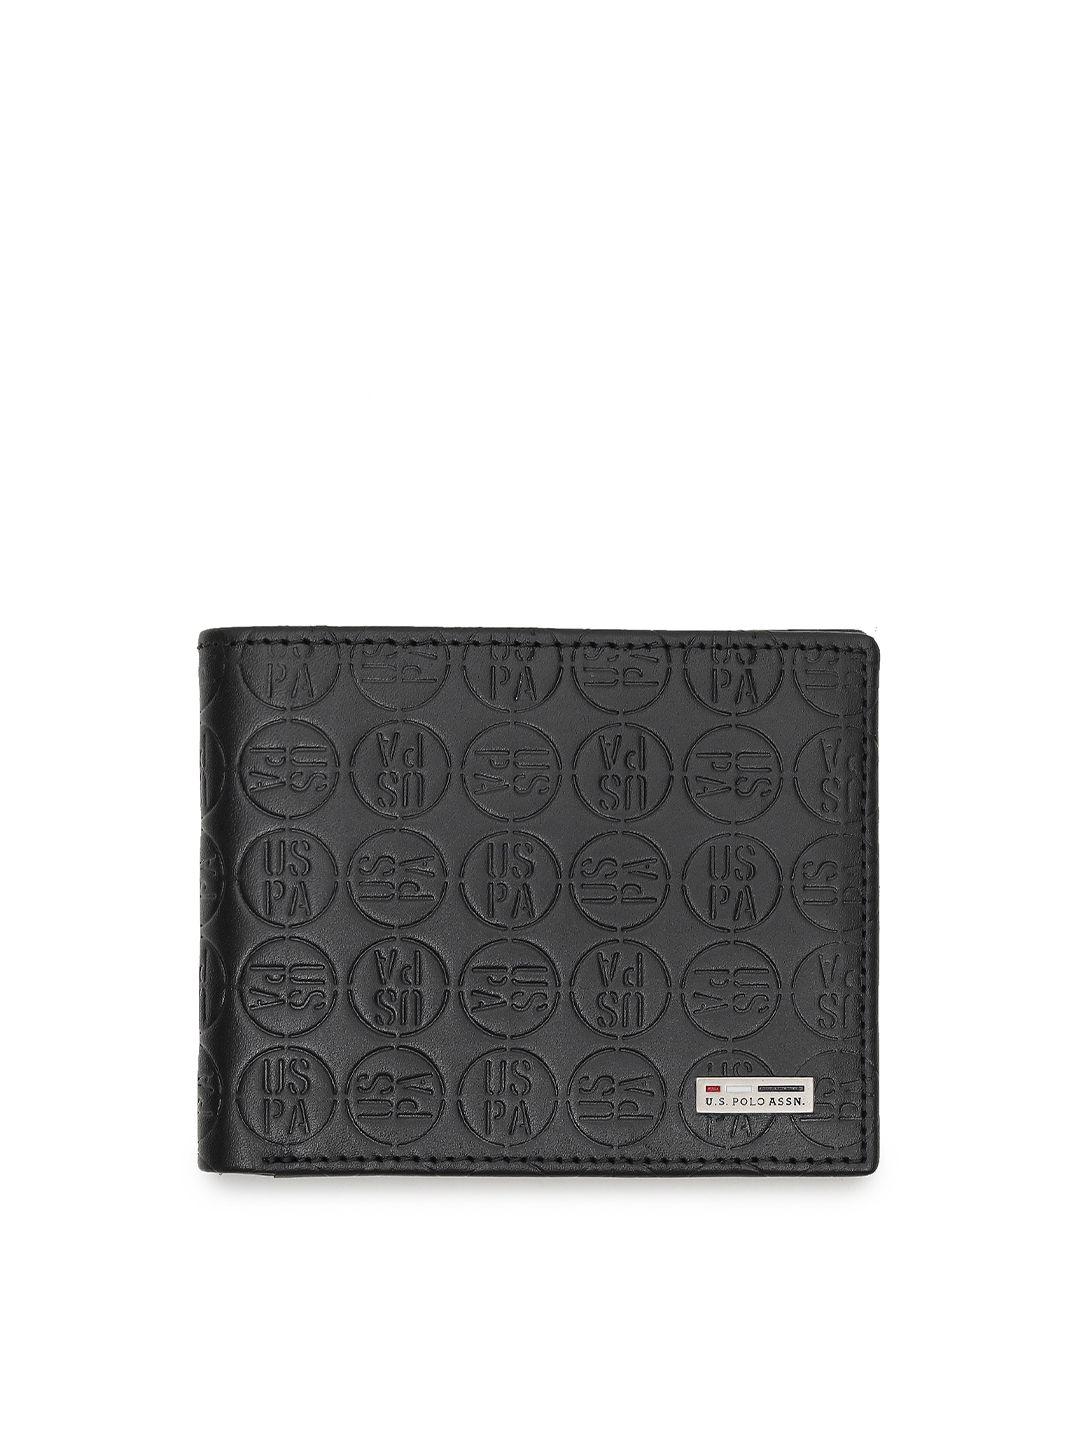 u-s-polo-assn-men-black-textured-two-fold-wallet